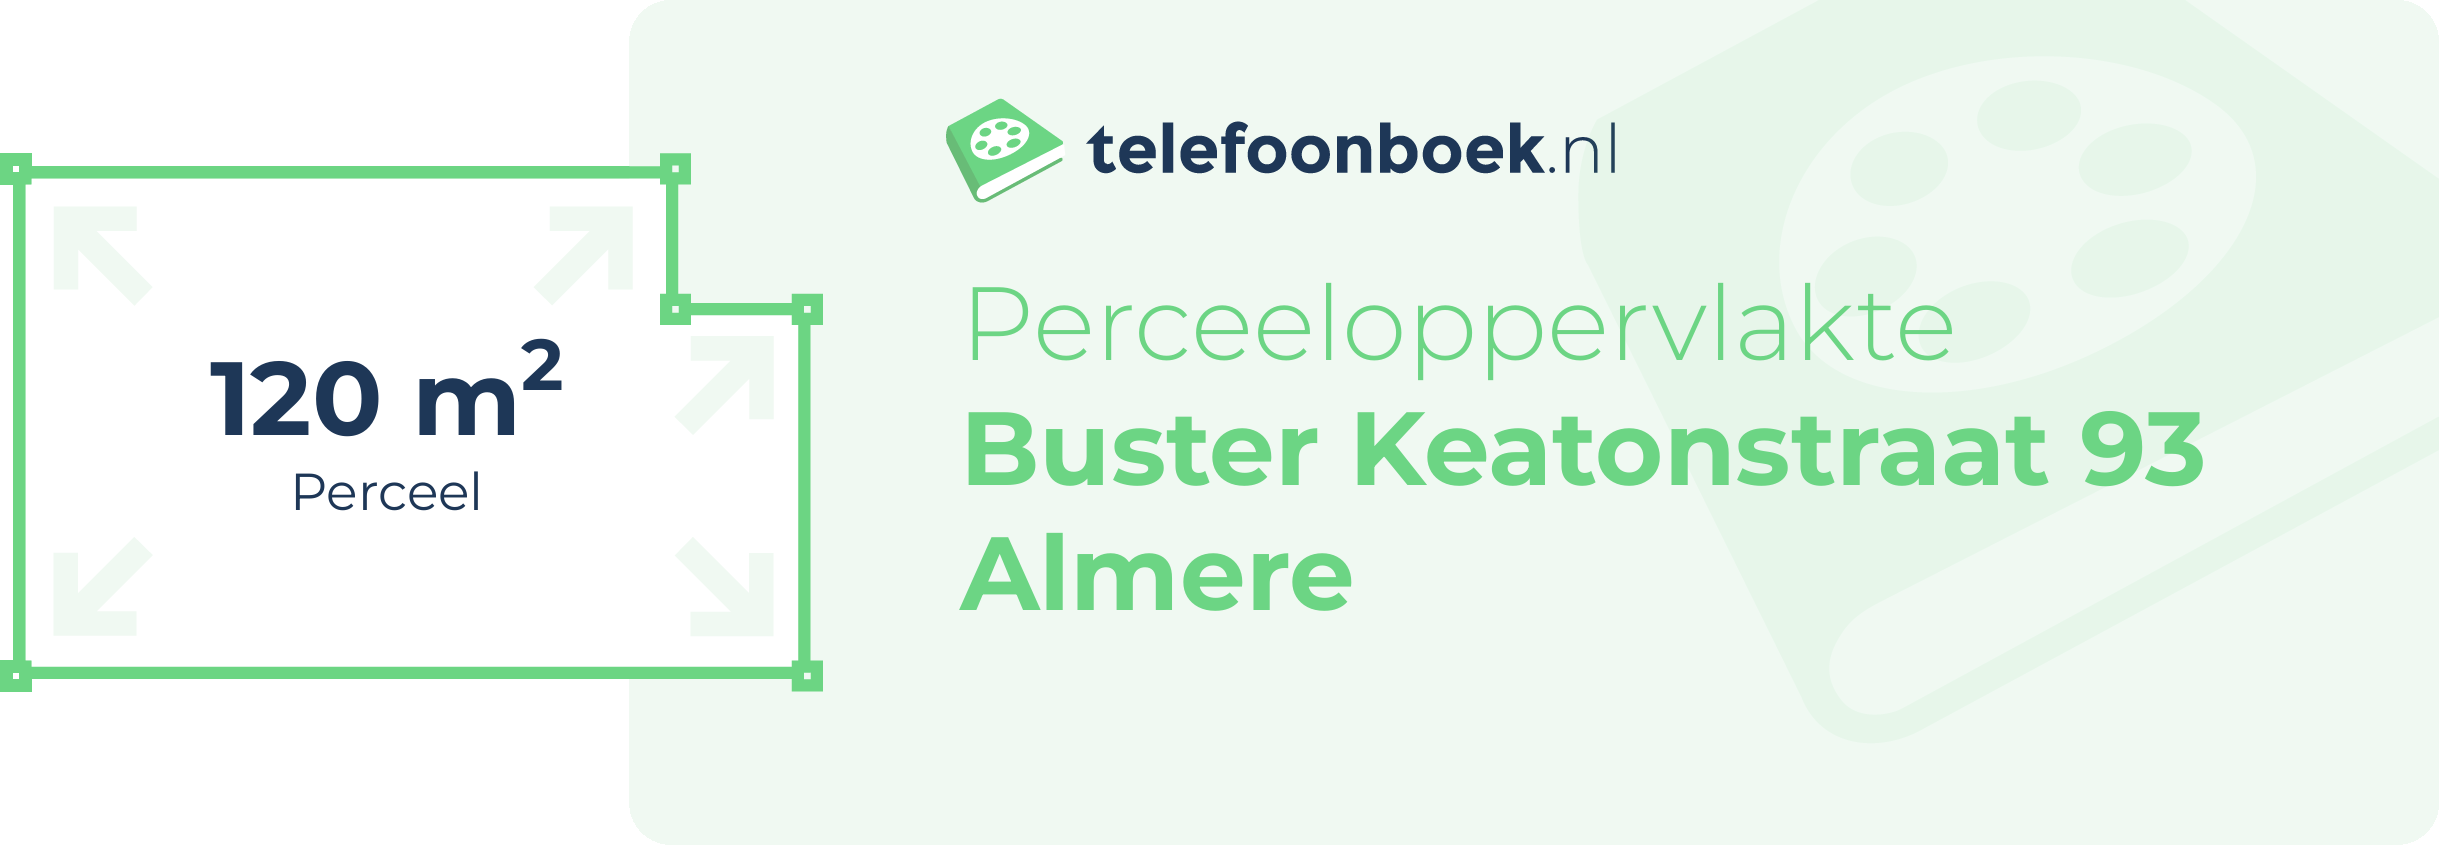 Perceeloppervlakte Buster Keatonstraat 93 Almere